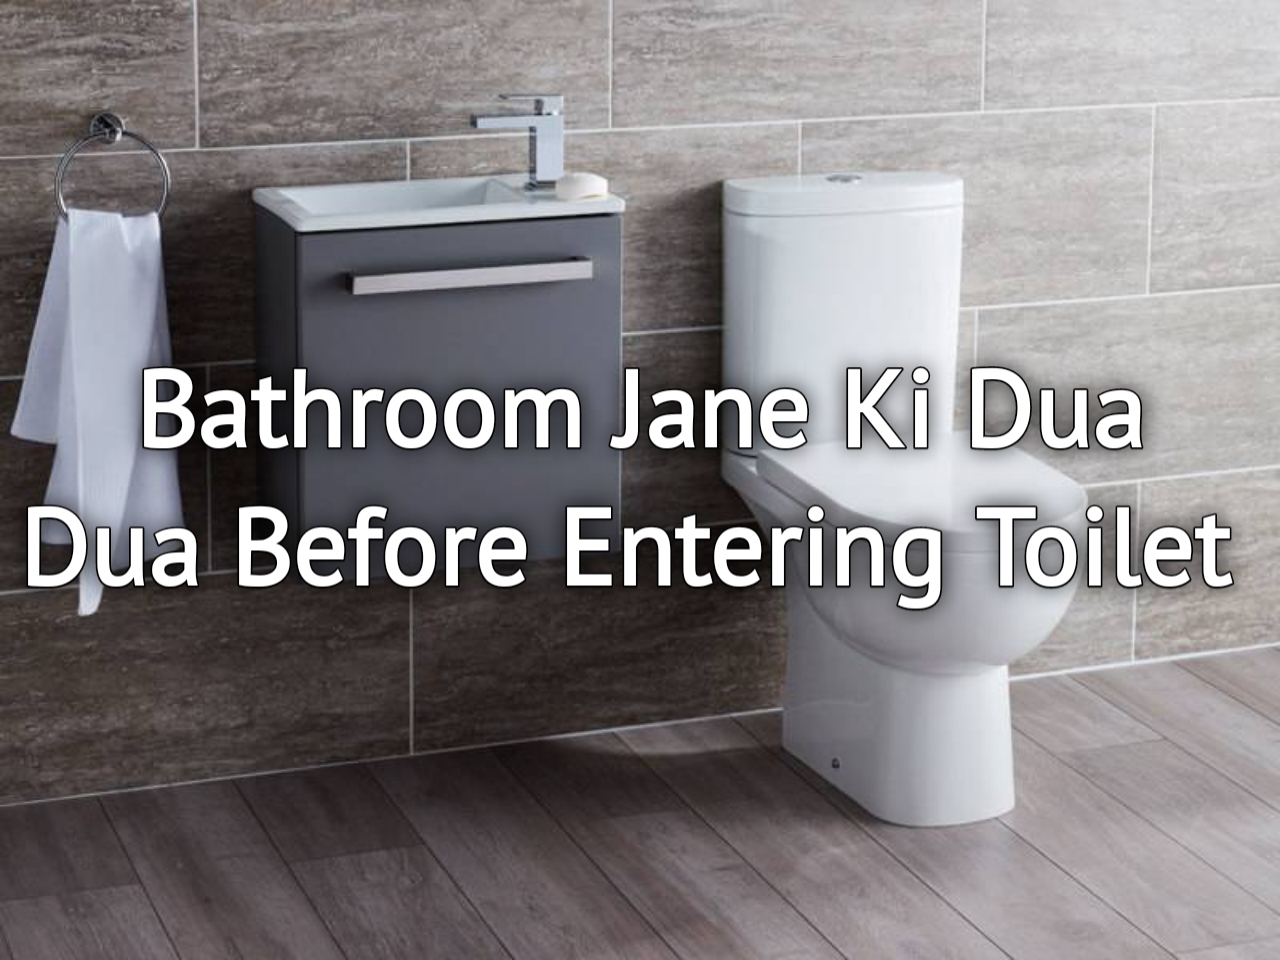 Bathroom jane ki dua | Dua before entering toilet